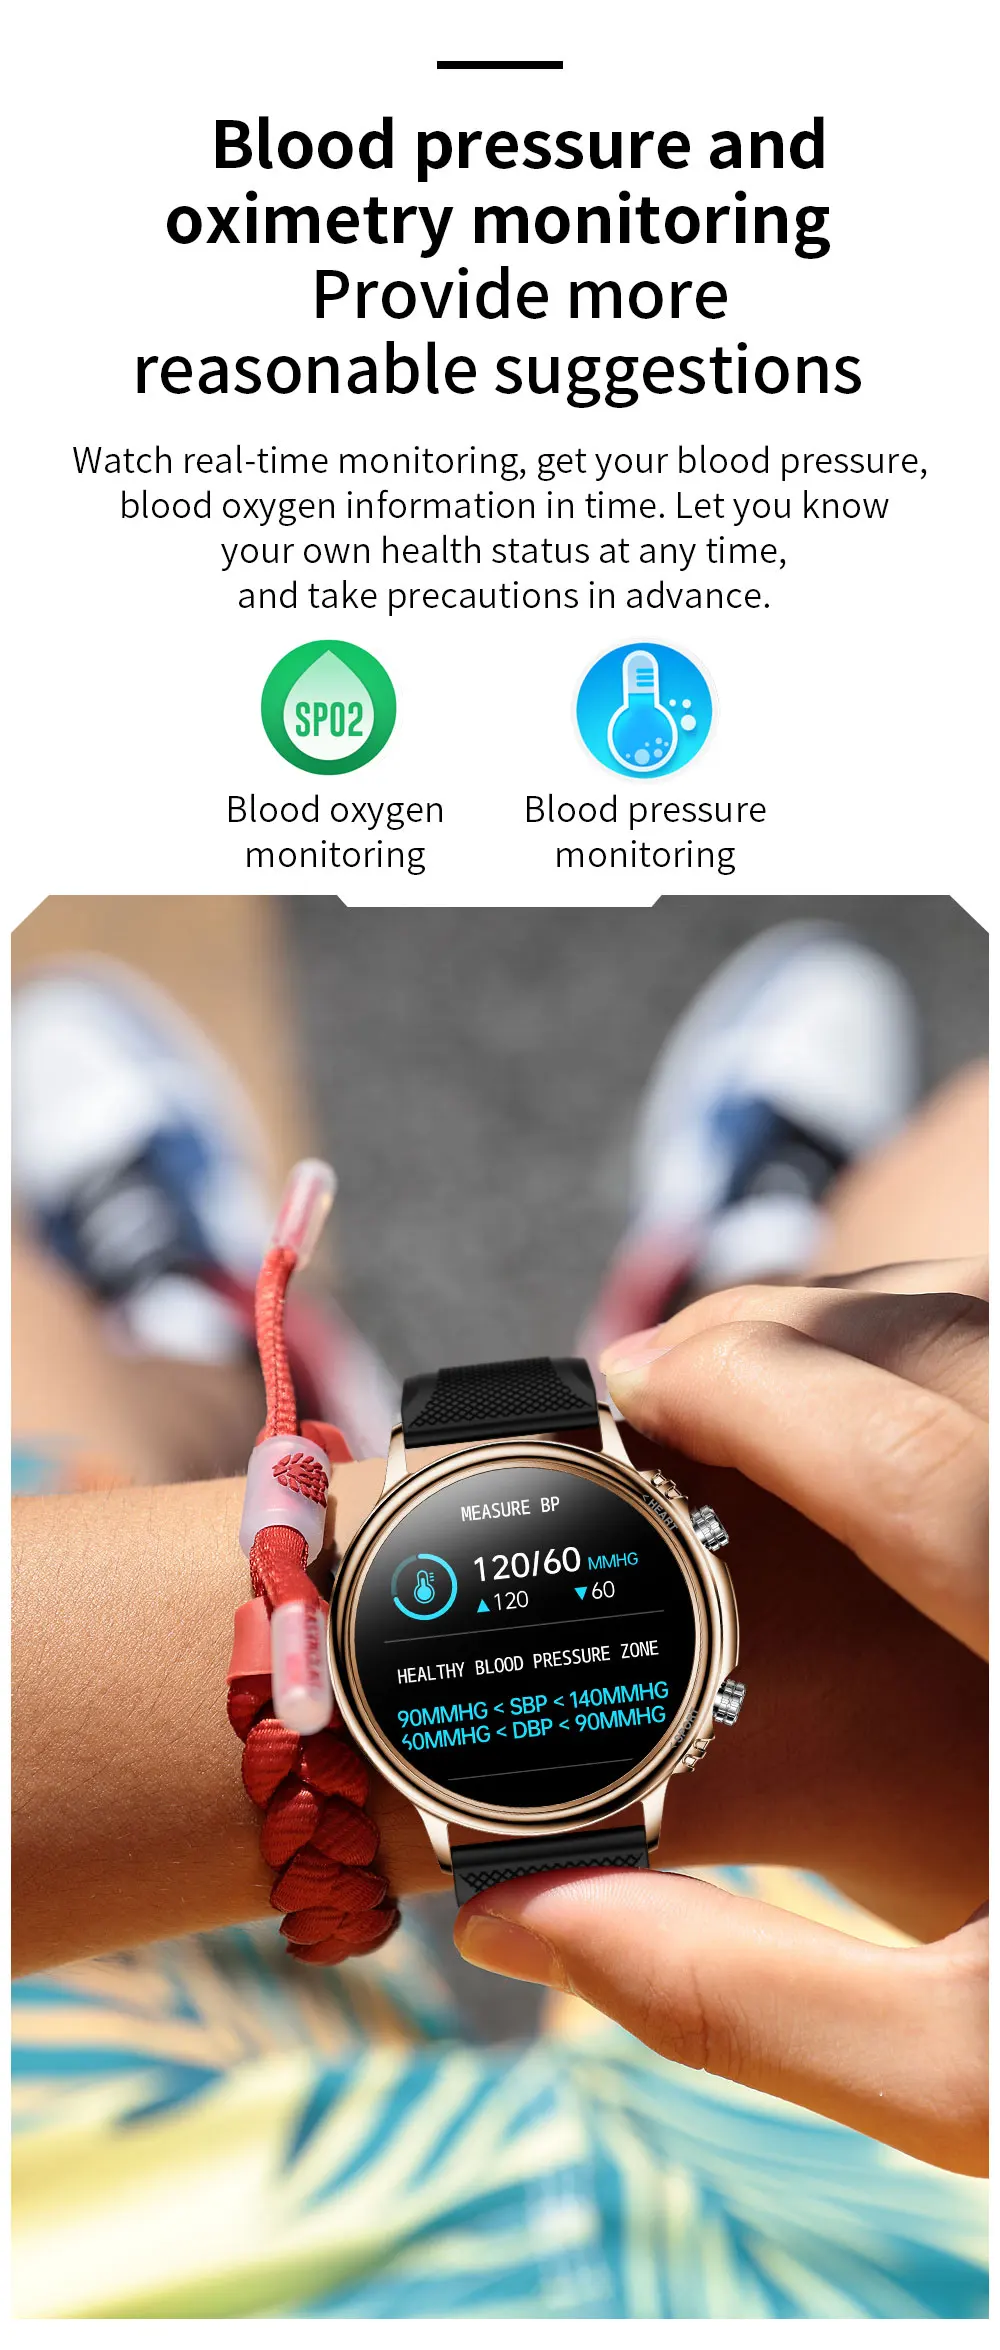 2023 new smart watch women men smartwatch waterproof watches fitness bracelet tracker band for apple huawei xiaomi android